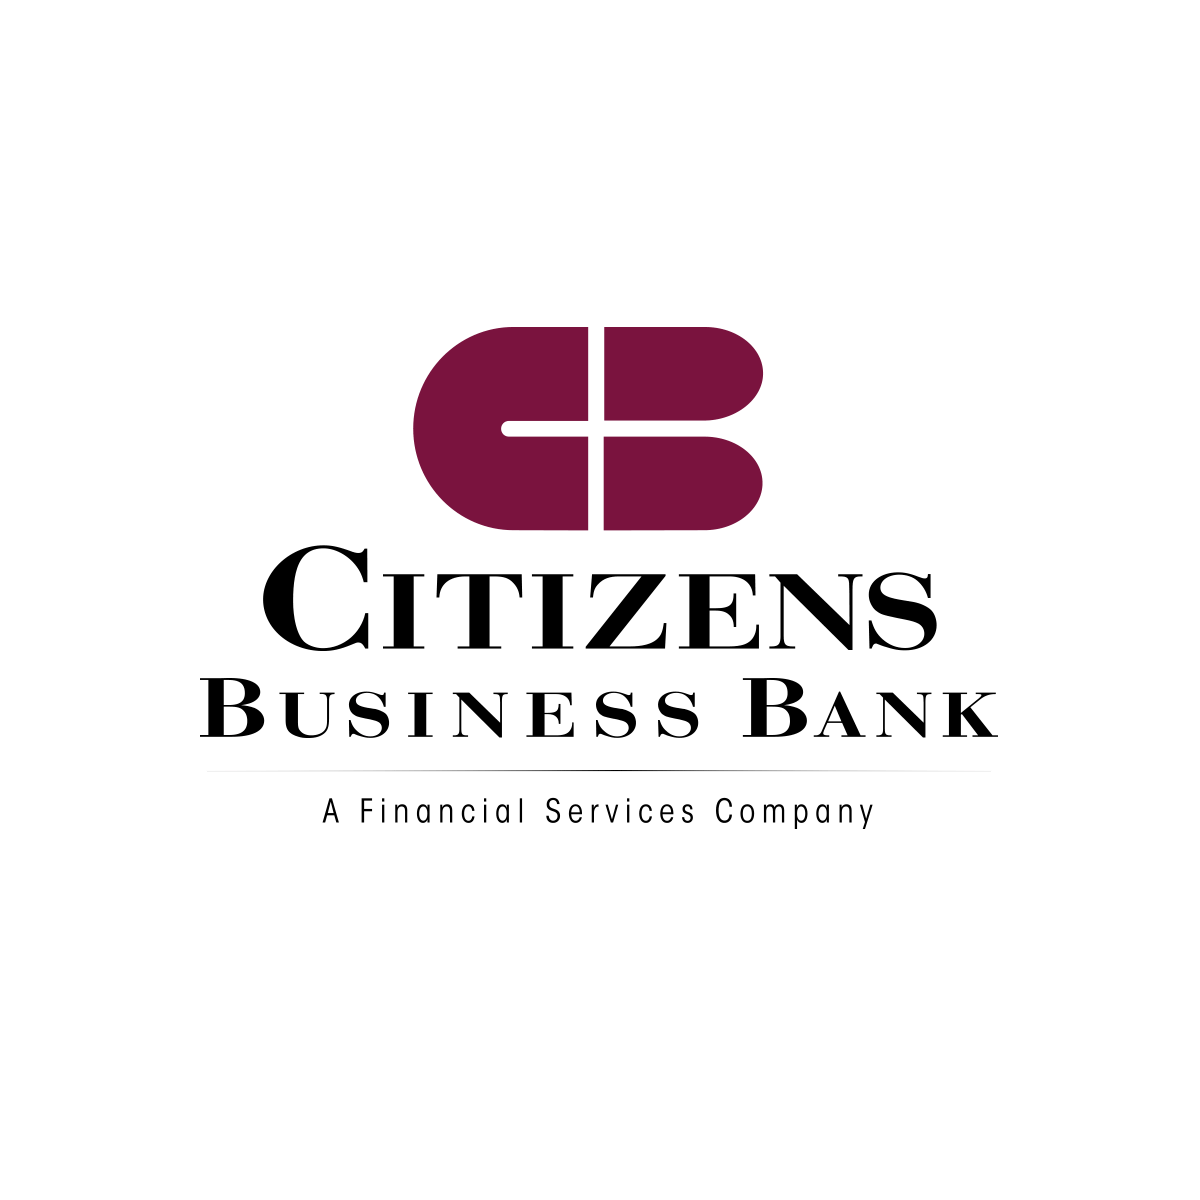 Citizens Bank Logo - Citizens Business Bank - A Financial Services Company